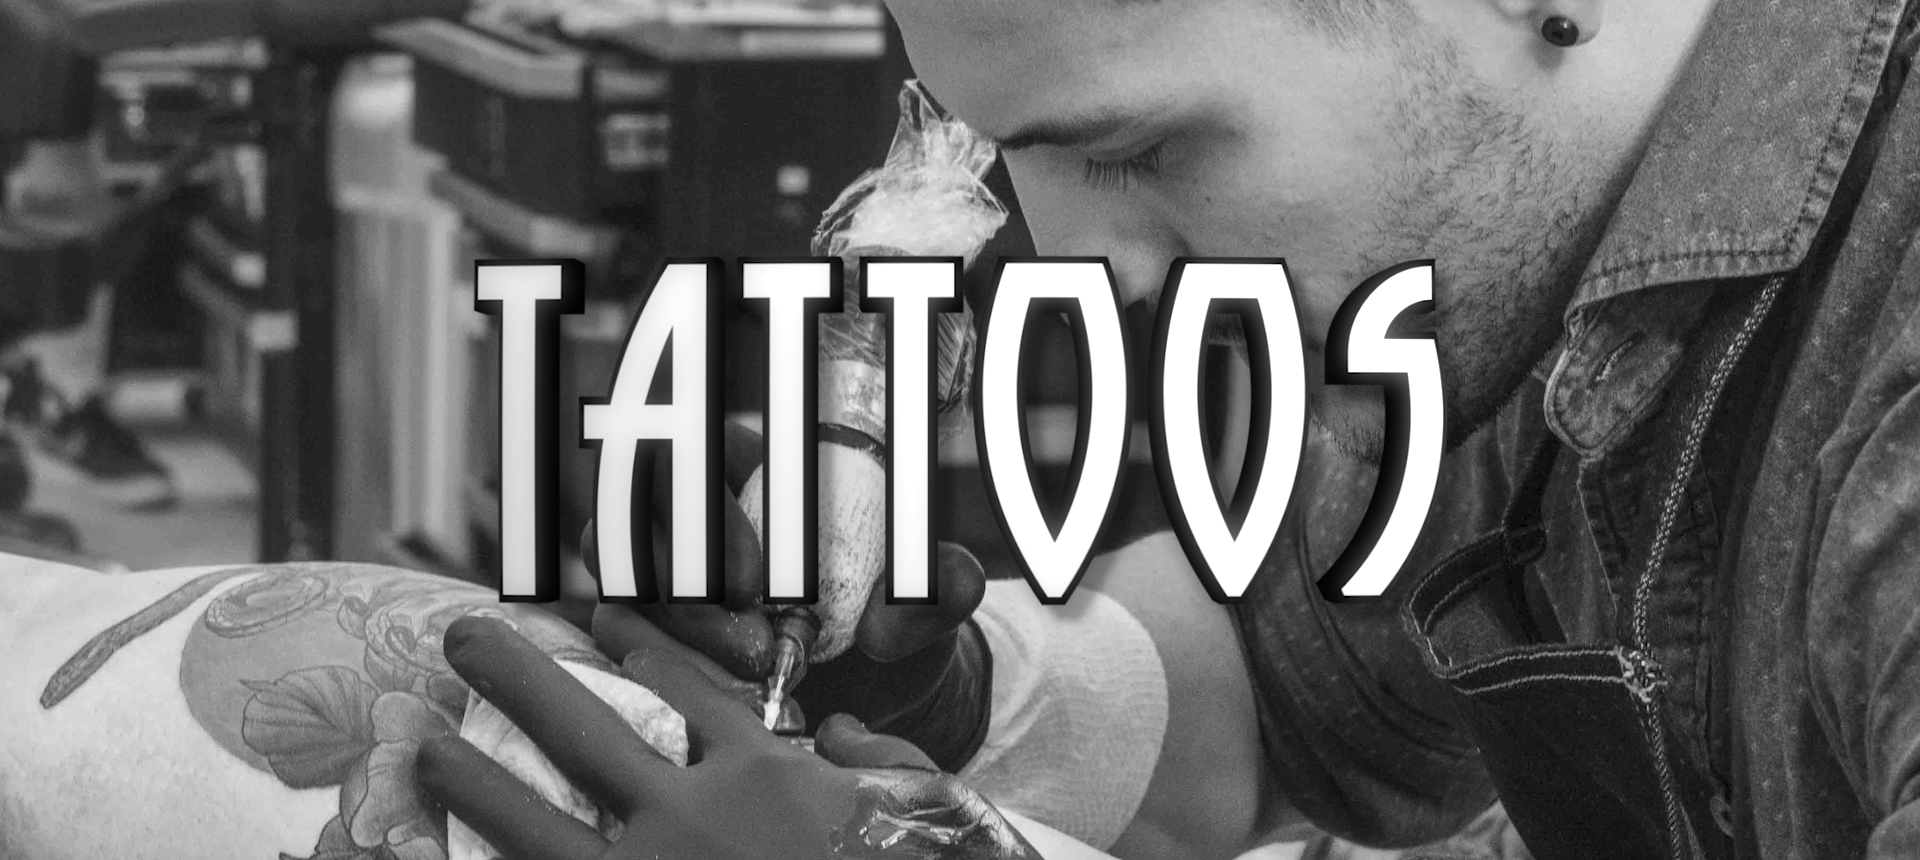 Live By The Sword Tattoo: Walk In Tattoos & Piercings, Brooklyn & Manhattan